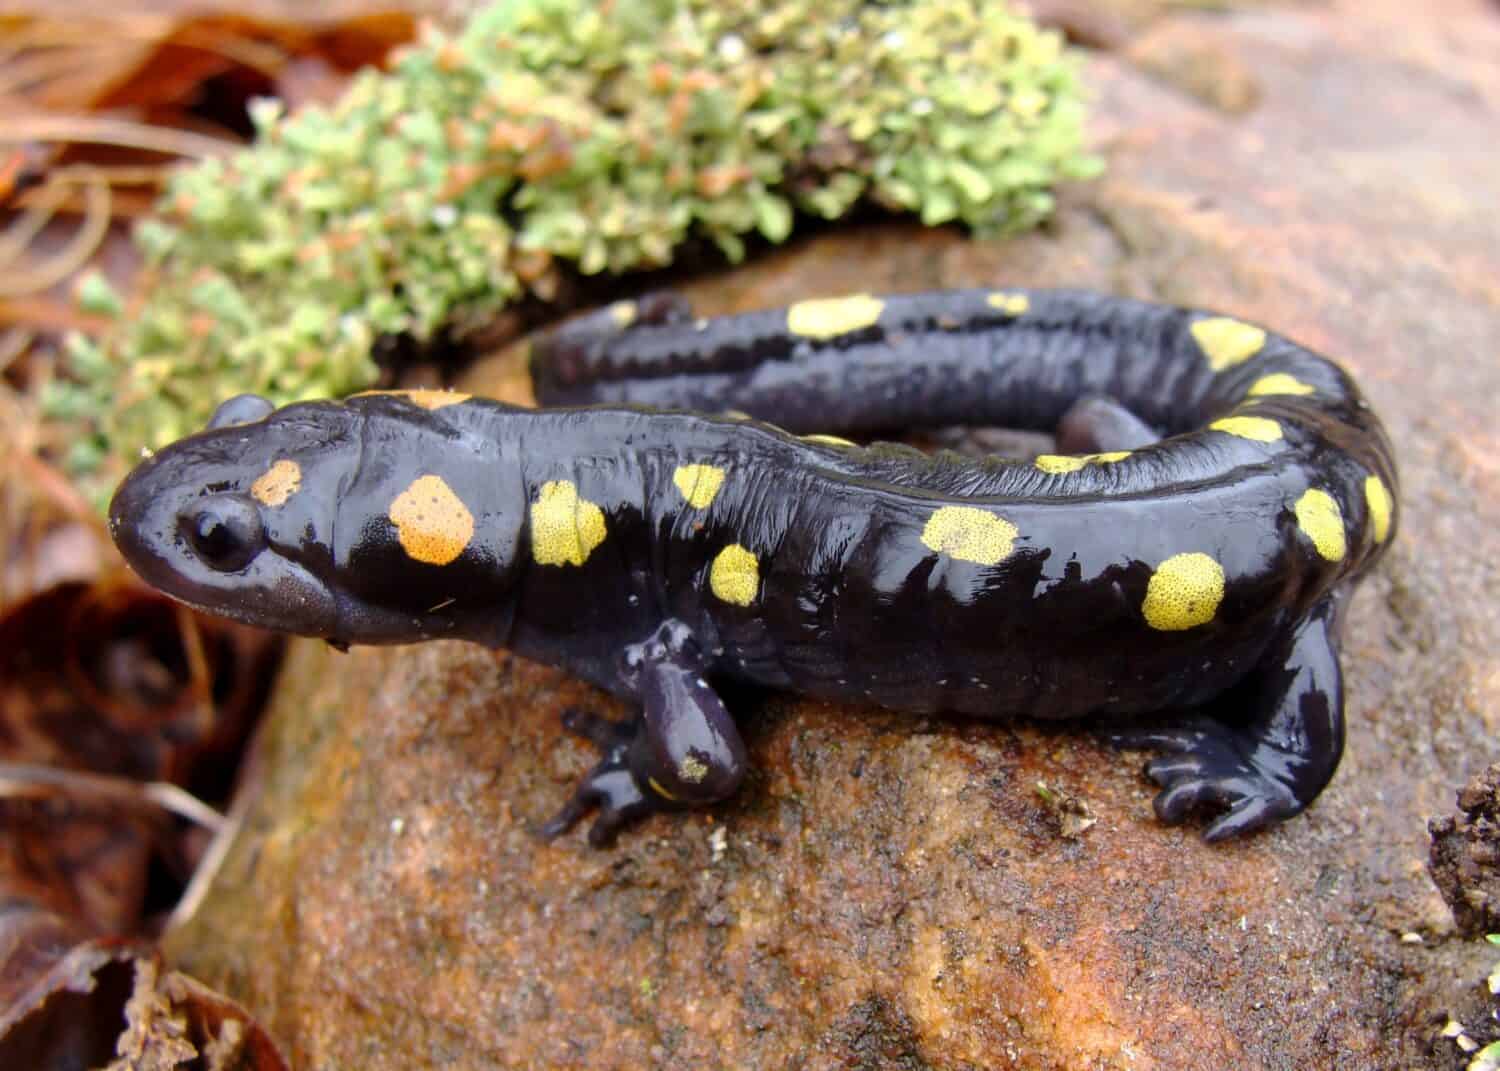 Spotted Salamander, the state amphibian of South Carolina